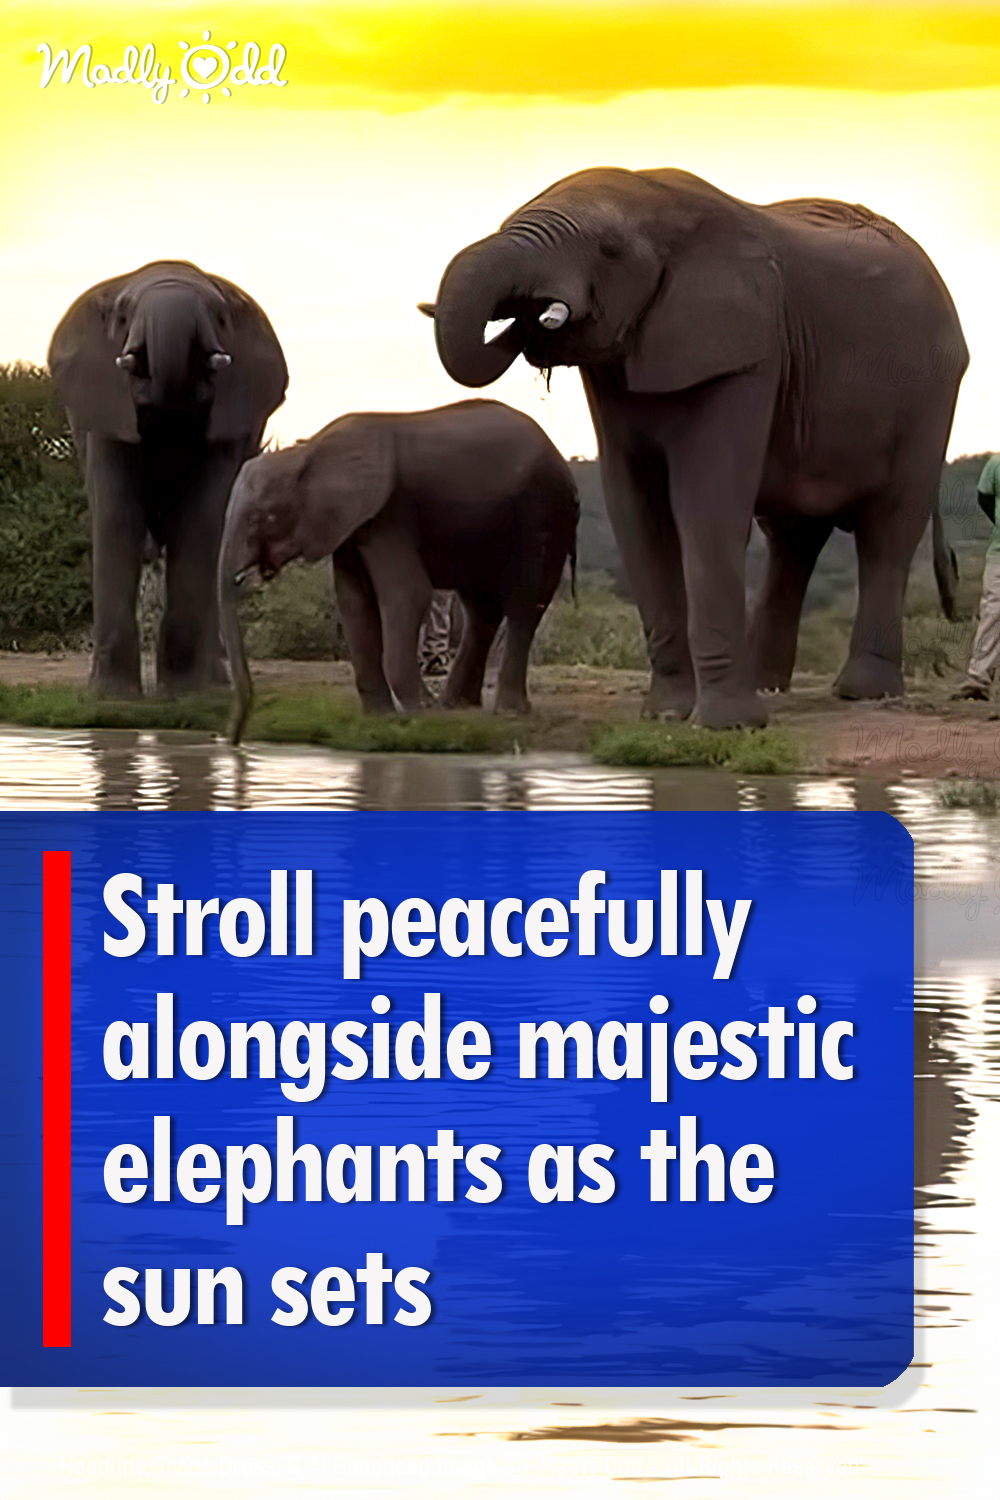 Take a serene sunset stroll alongside gentle elephant companions